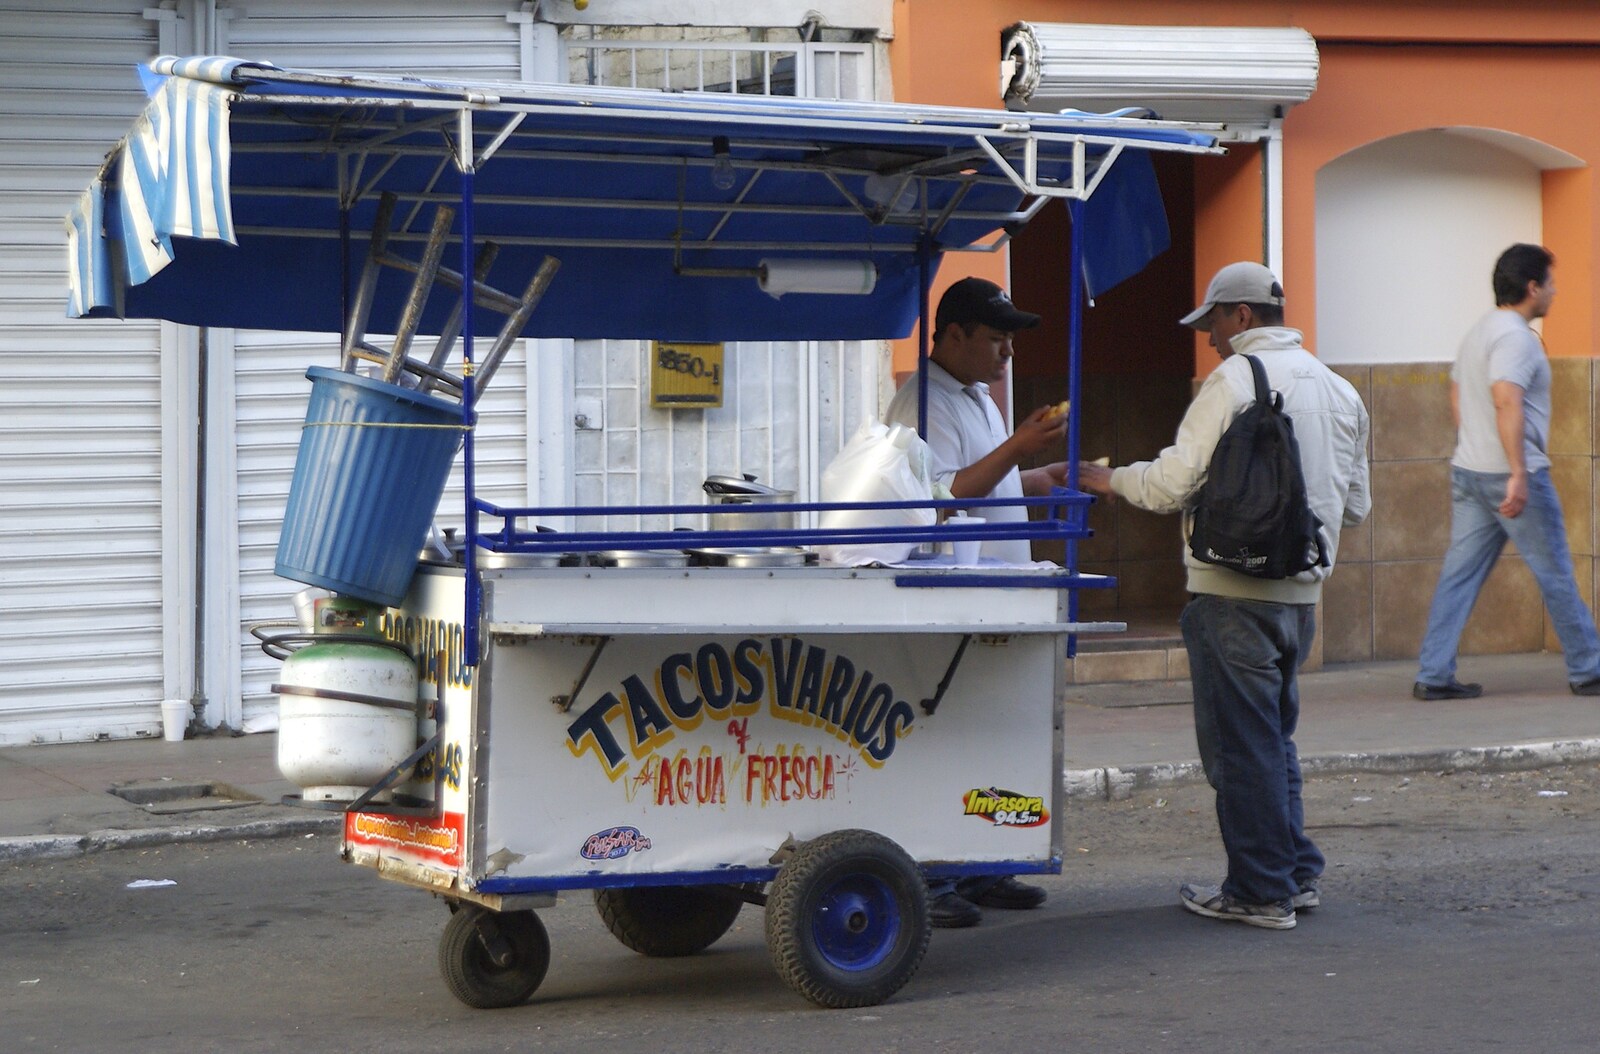 Rosarito and Tijuana, Baja California, Mexico - 2nd March 2008: A mobile taco stall